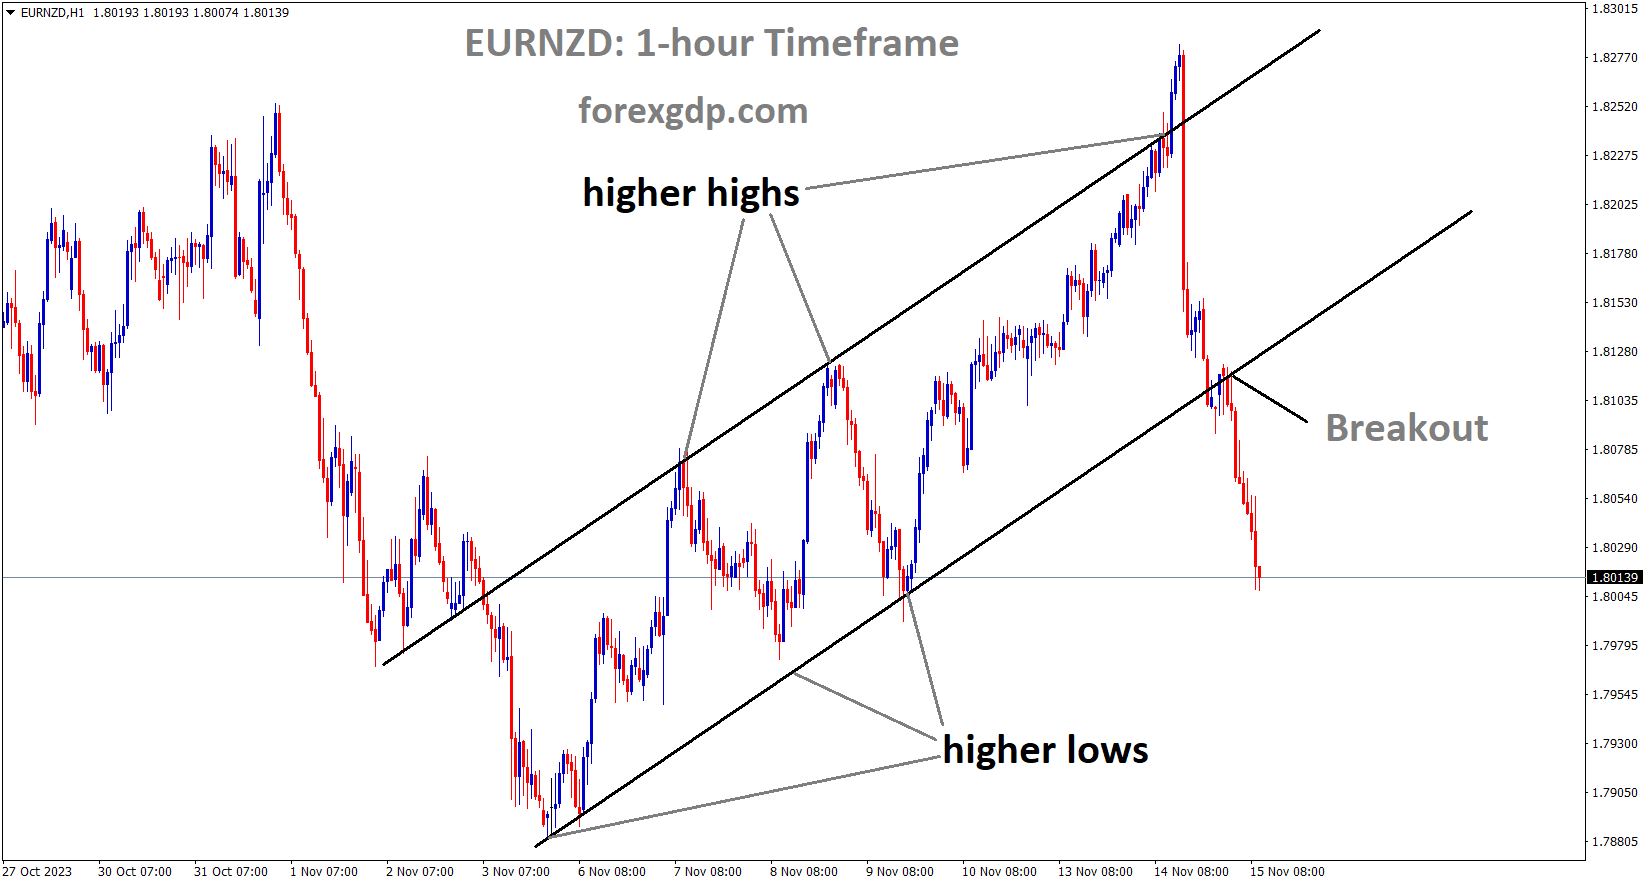 EURNZD has broken the Ascending channel in down side